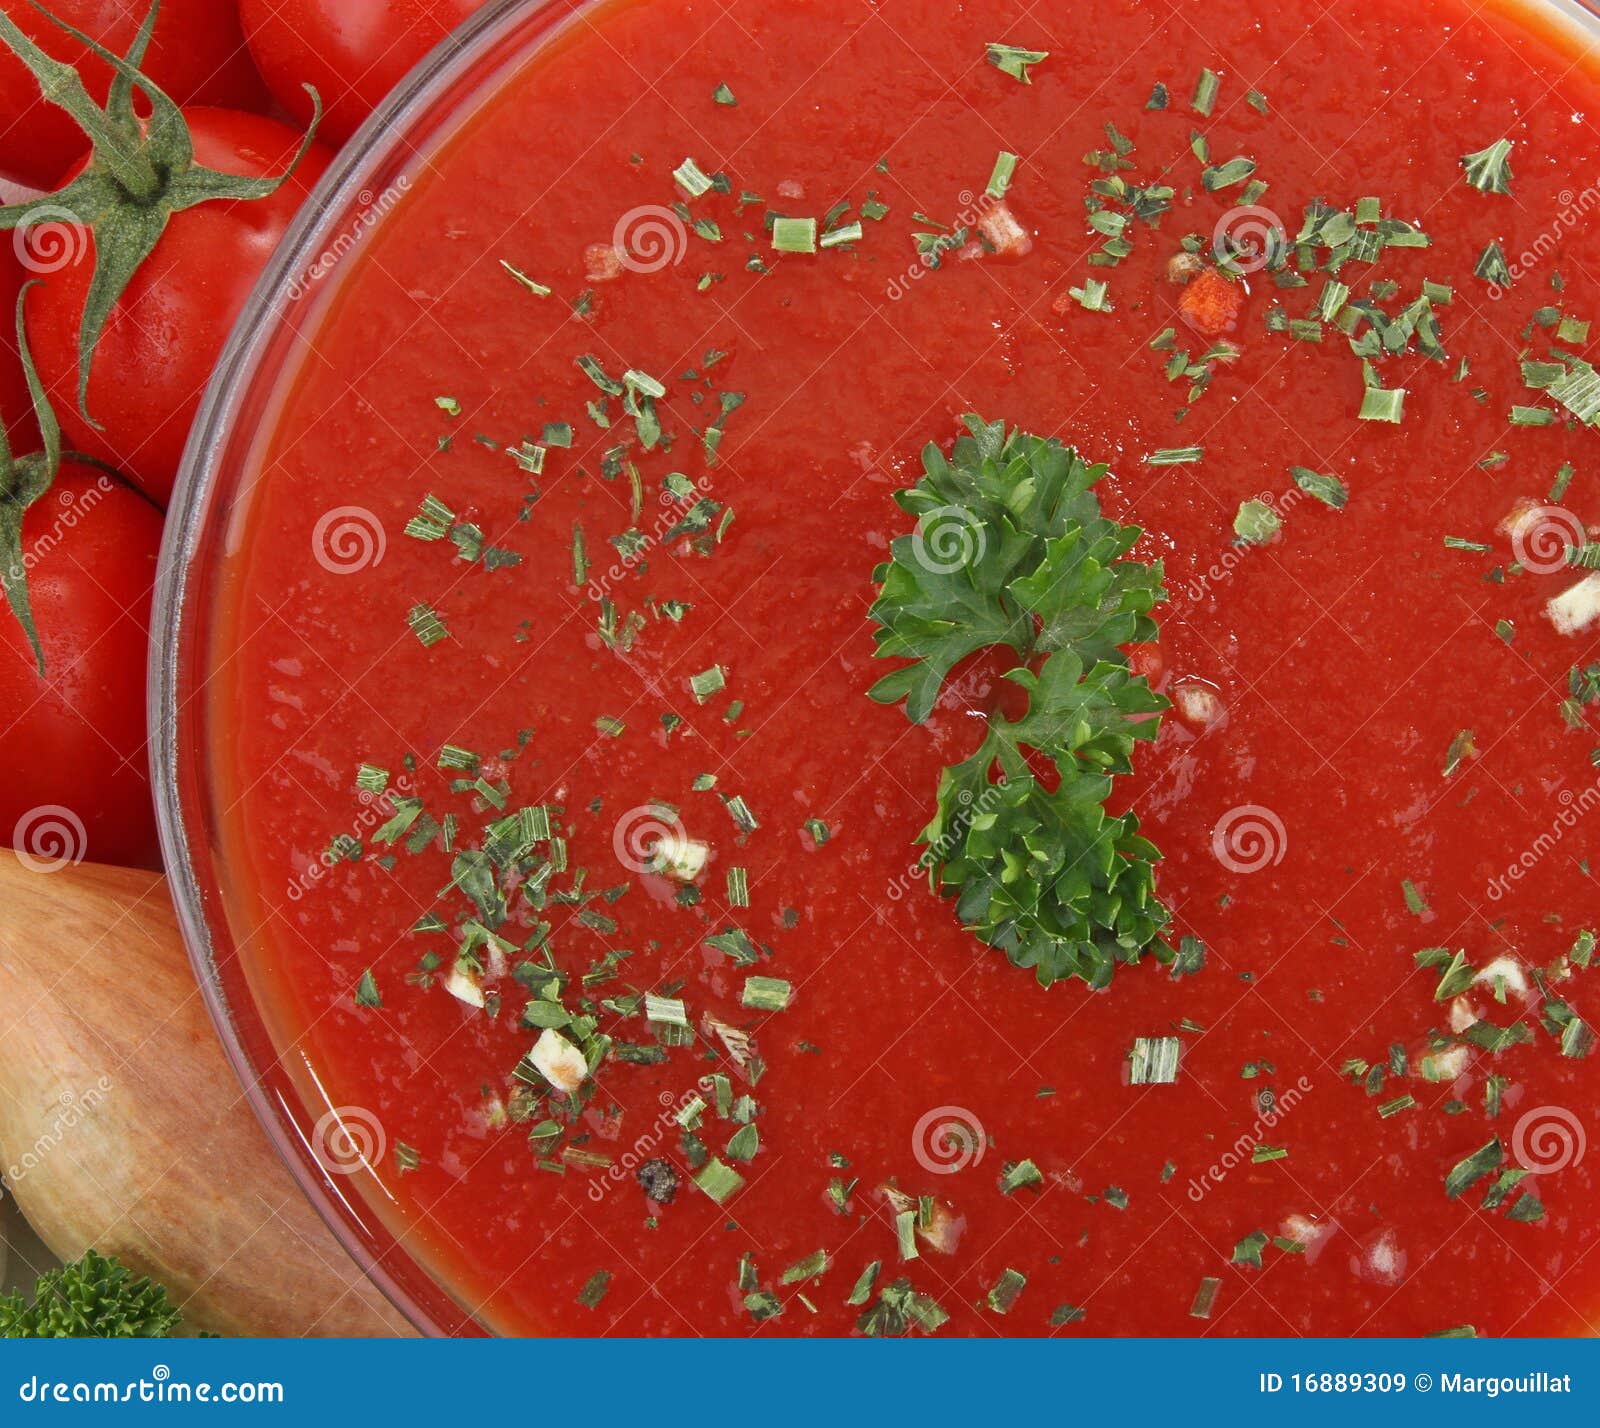 Soup stock image. Image of cuisine, diet, ingredient - 16889309